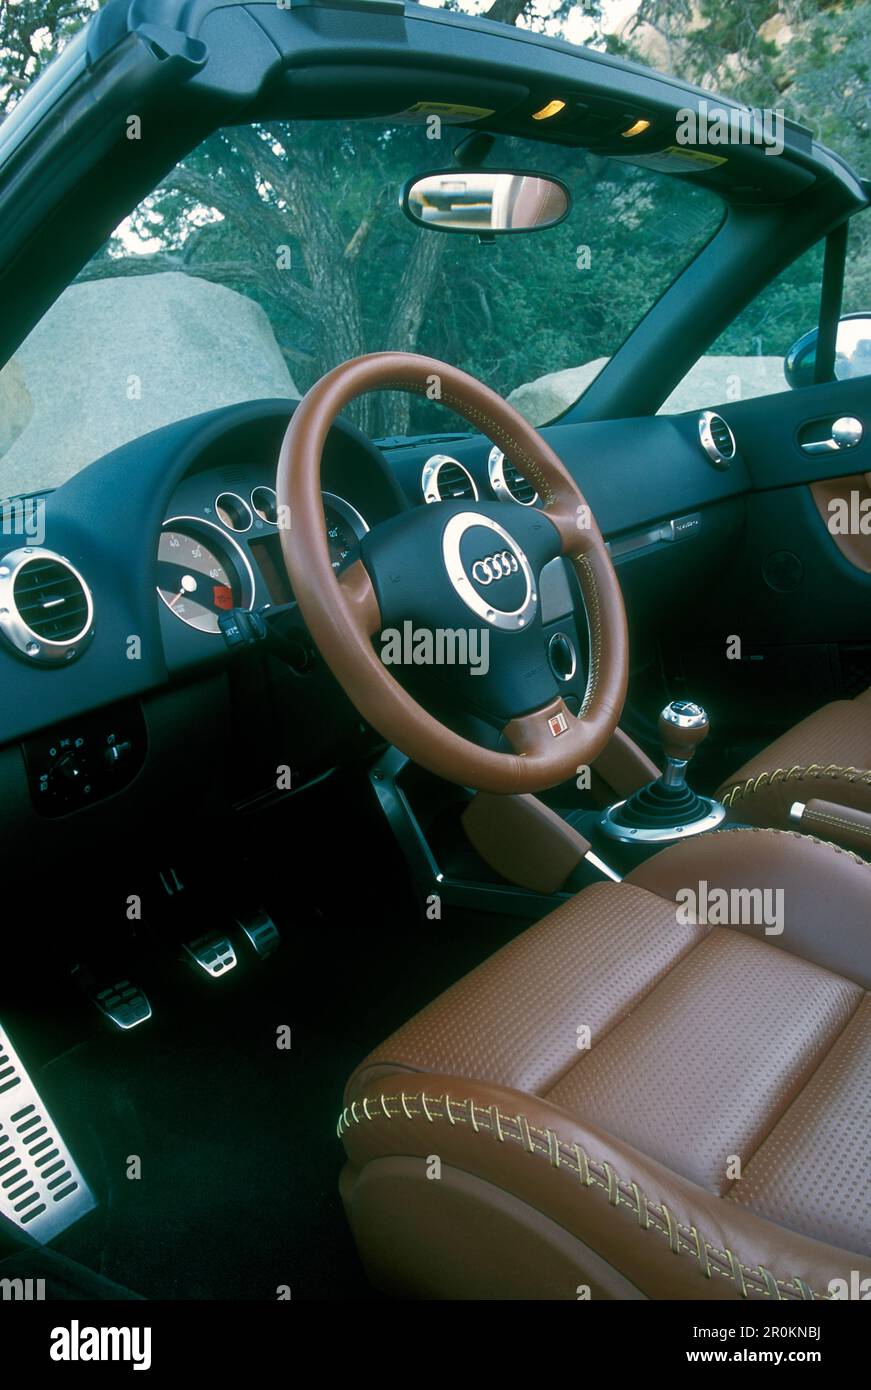 1999 Audi TT 1.8T cabriolet interior Southern California USA Stock Photo